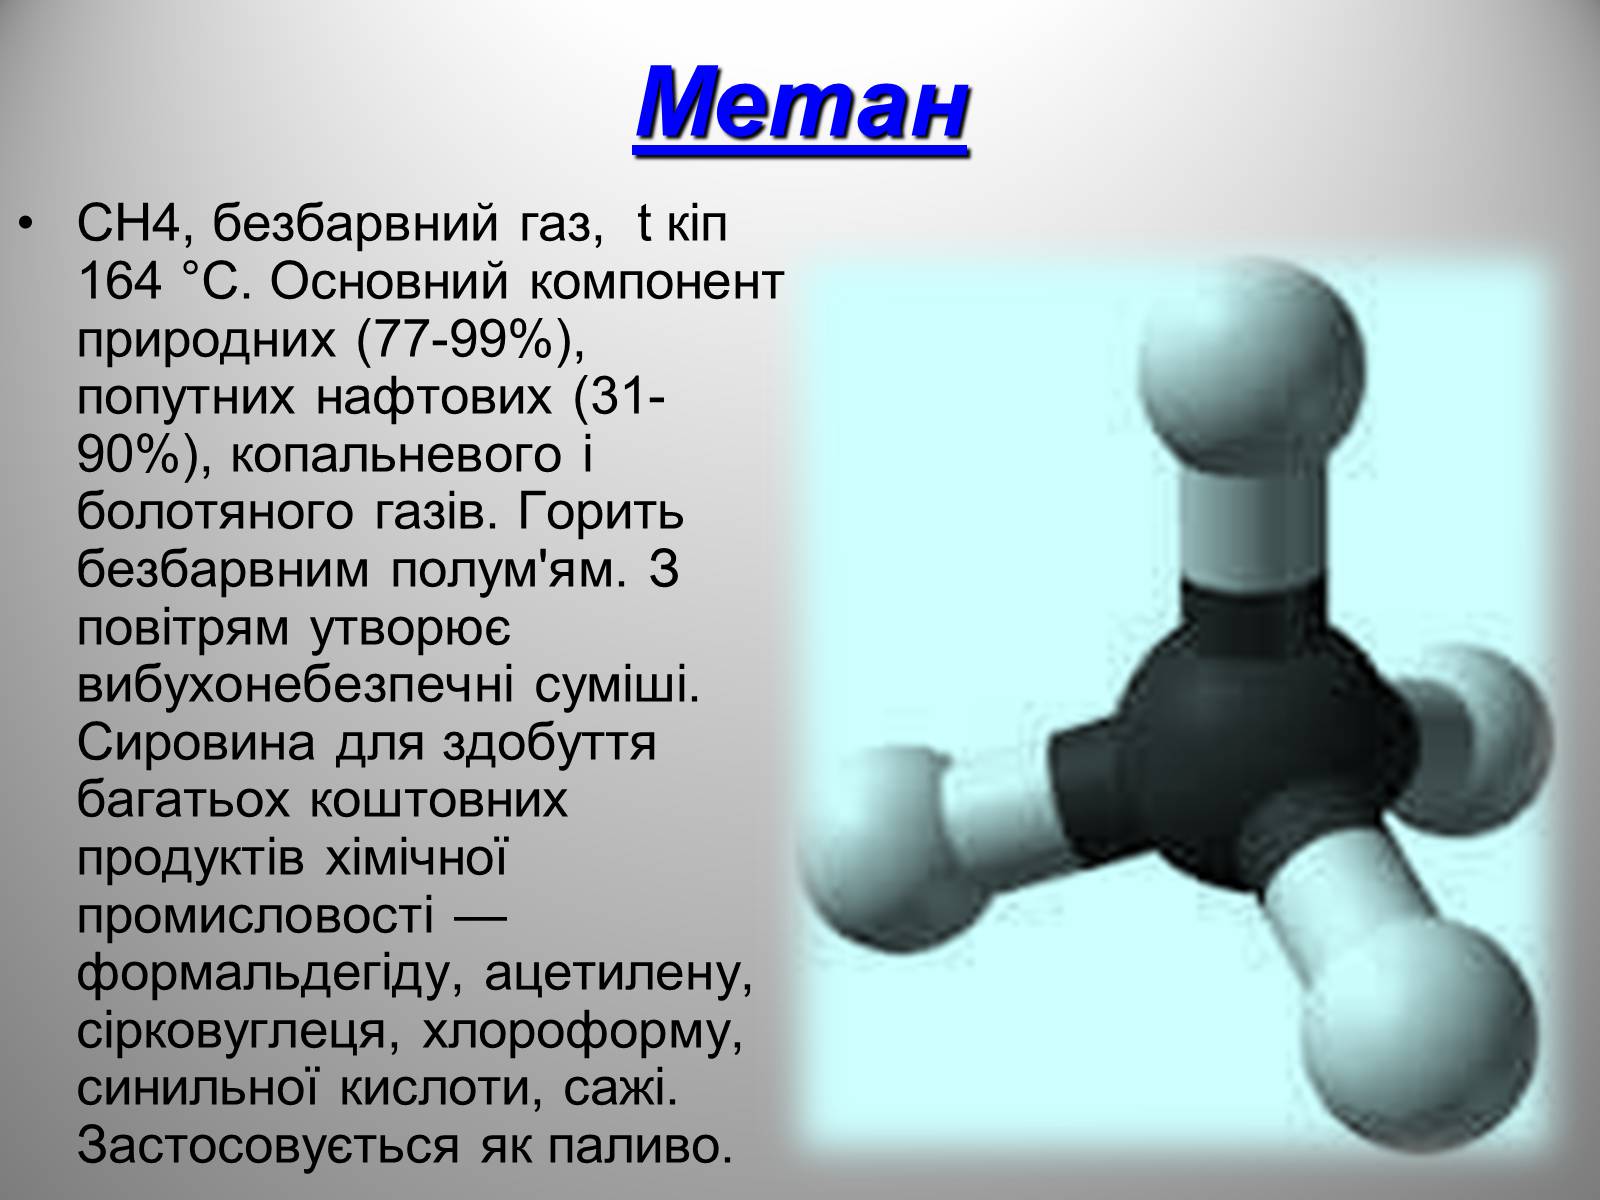 Ch4 газ название. Модель метана ch4. Метан ch4. Метан (ch4) ГАЗ. Молекула метана ch4.